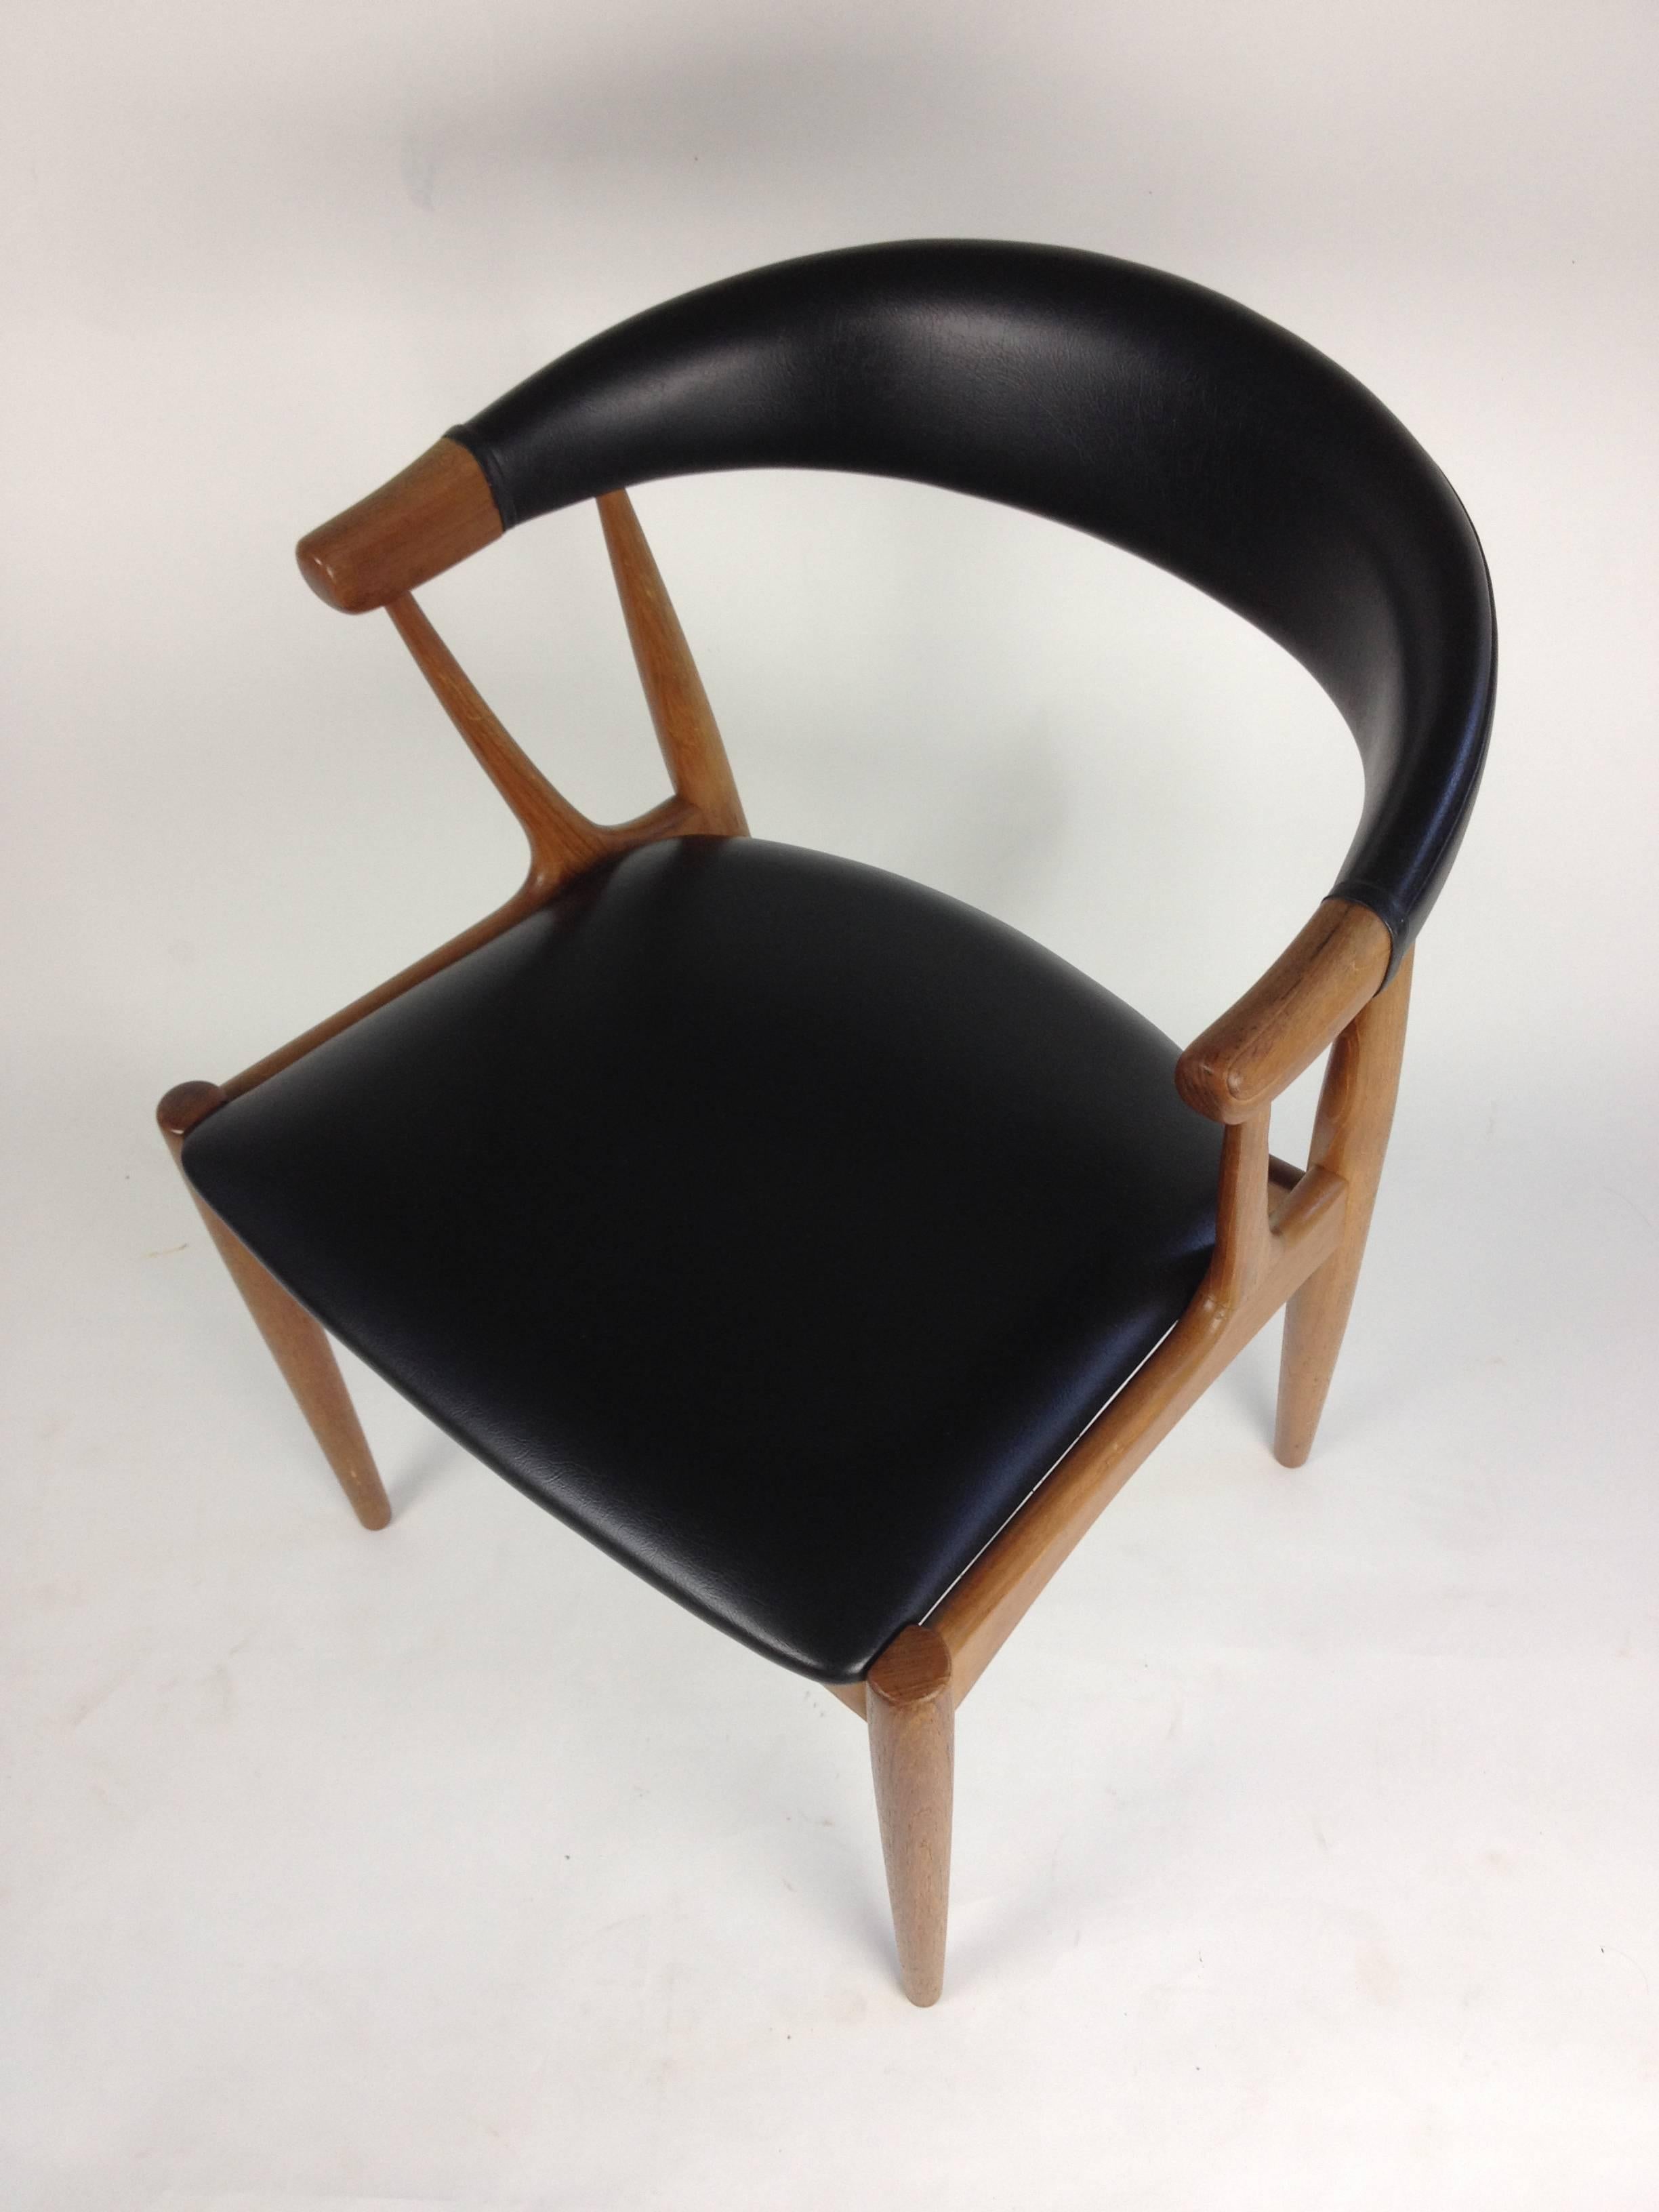 Mid-20th Century Striking Mid-Century Modern Teak Chair Designed by Johannes Andersen - Denmark For Sale